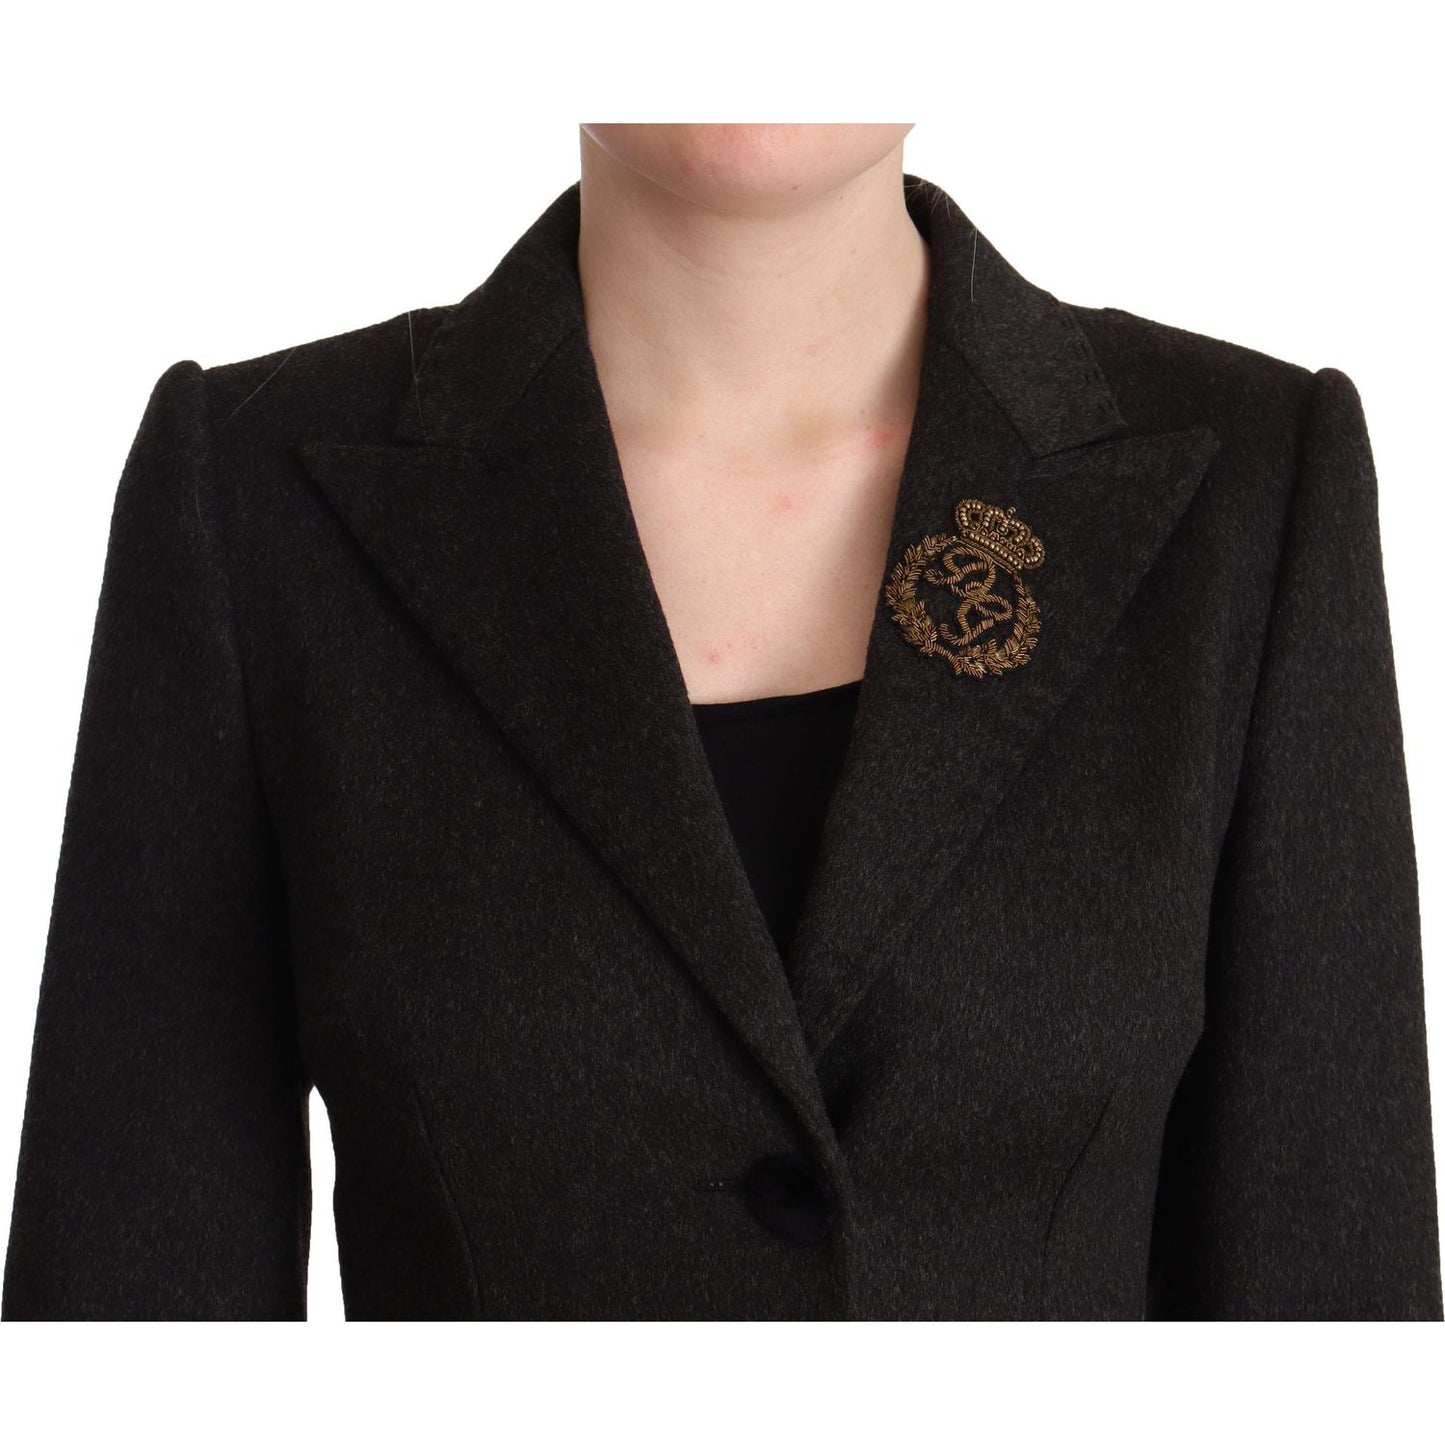 Dolce & Gabbana Elegant Wool-Cashmere Blend Coat in Black Gray gray-wool-cashmere-coat-crest-applique-jacket IMG_1303-scaled-f0c0d4cb-4f7.jpg